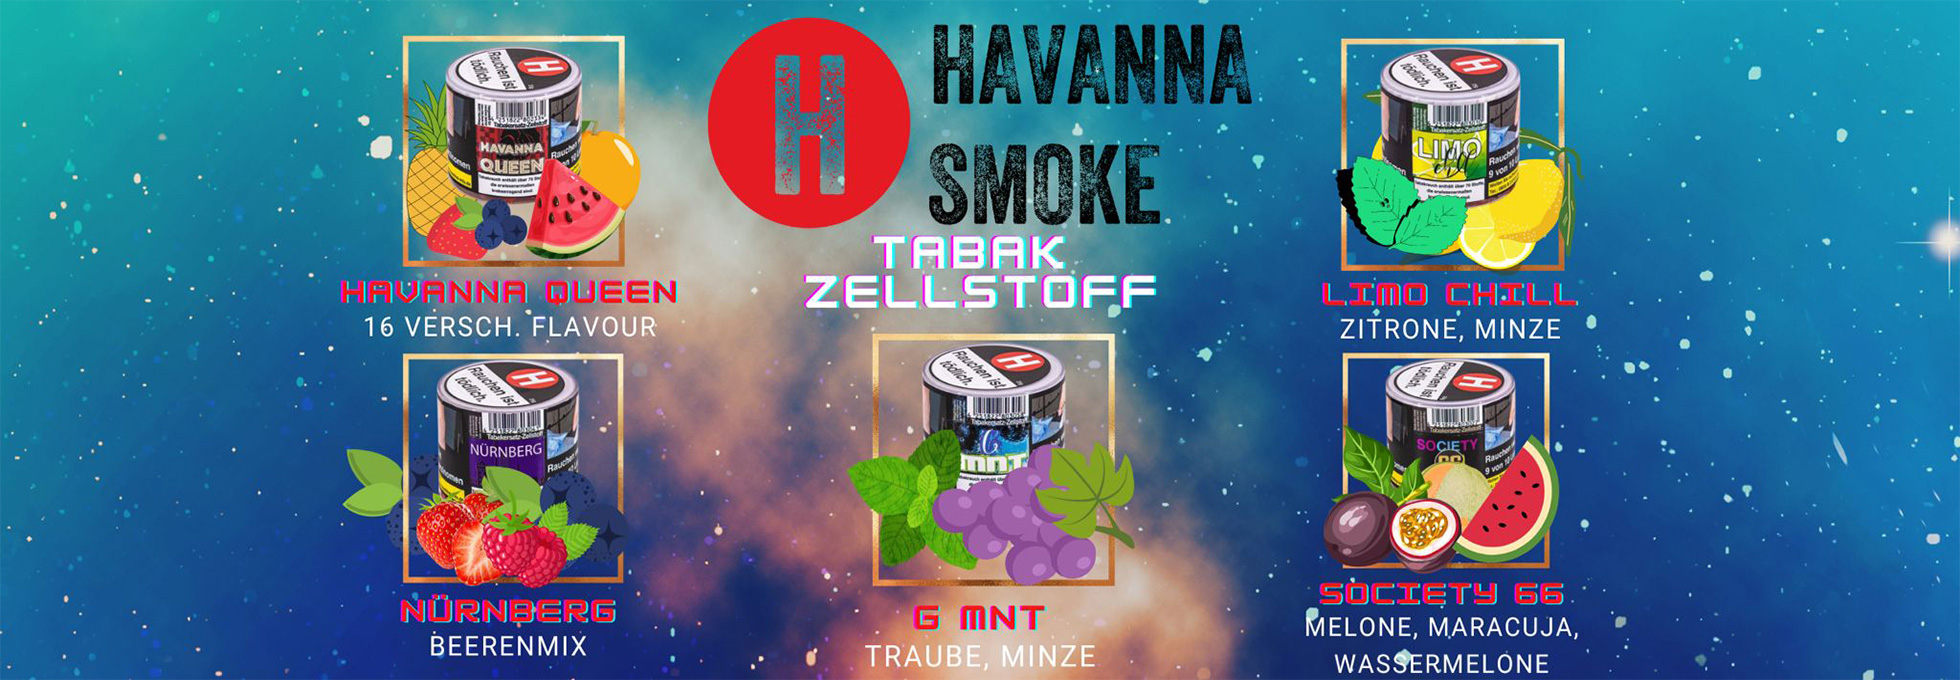 HAVANNA SMOKE